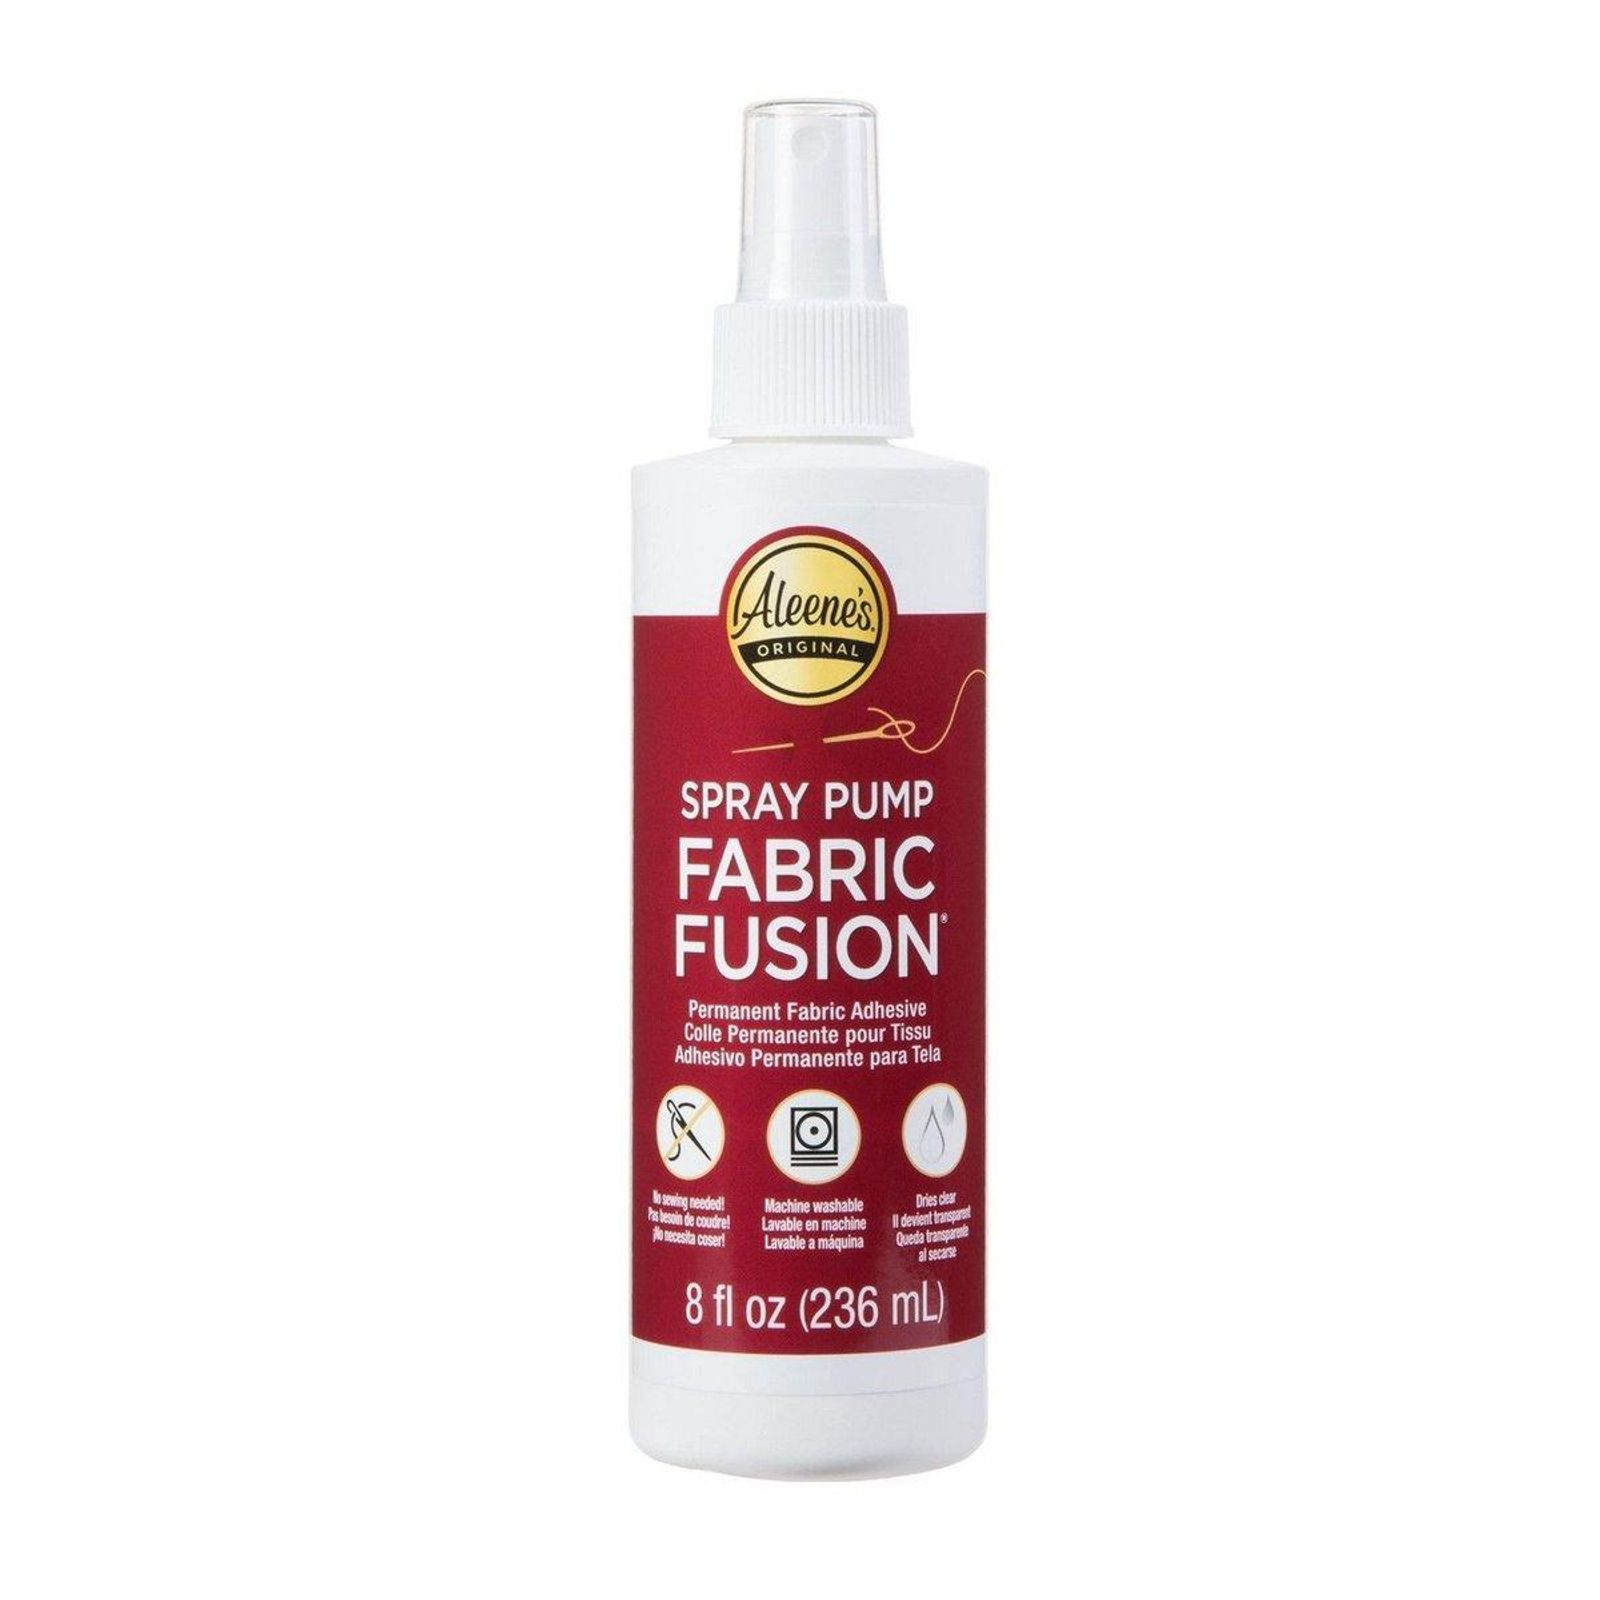 Aleene's | Fabric fusion glue spray pump 236ml